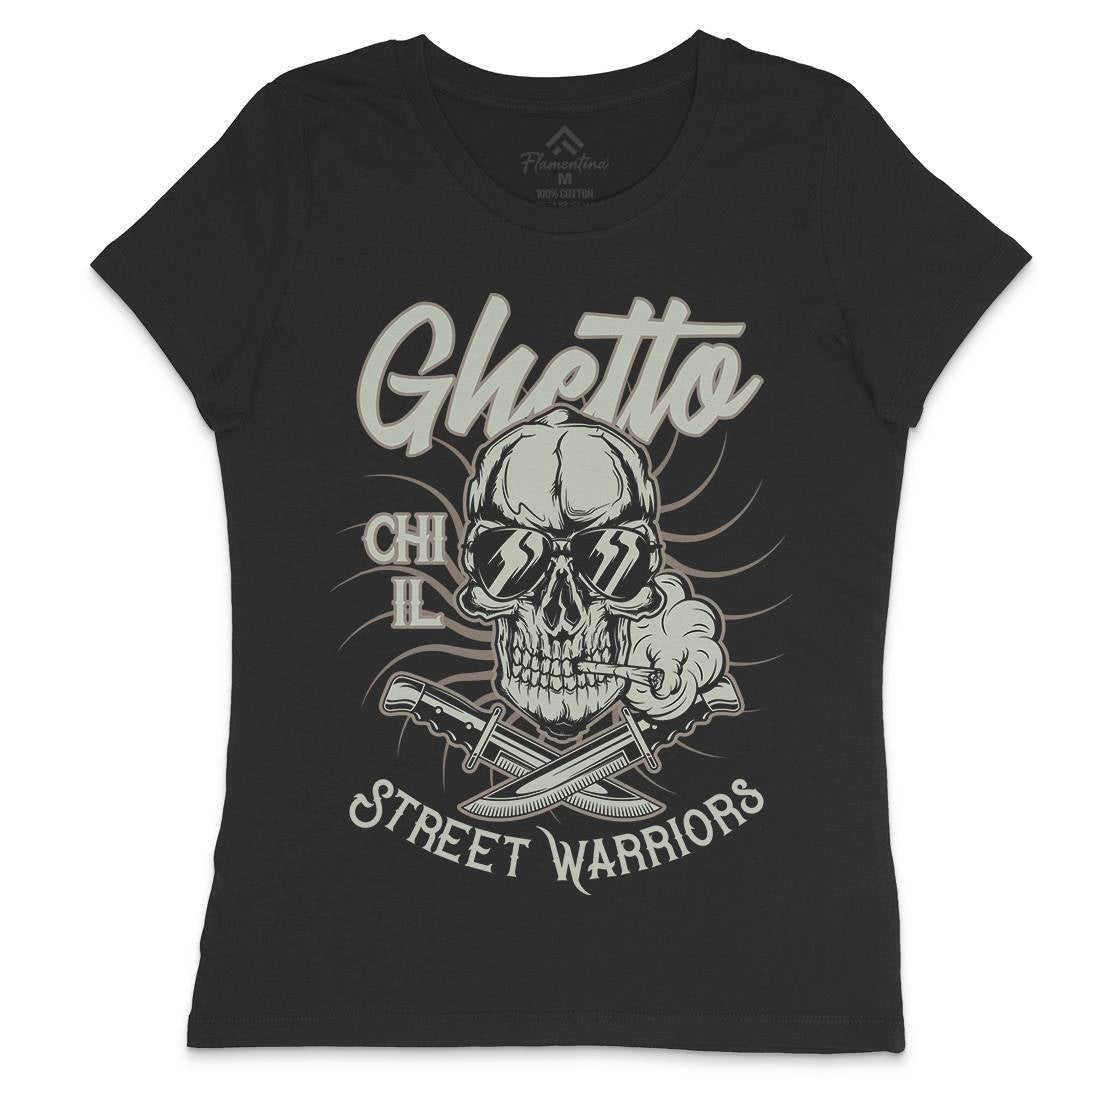 Ghetto Street Warriors Womens Crew Neck T-Shirt Retro D937